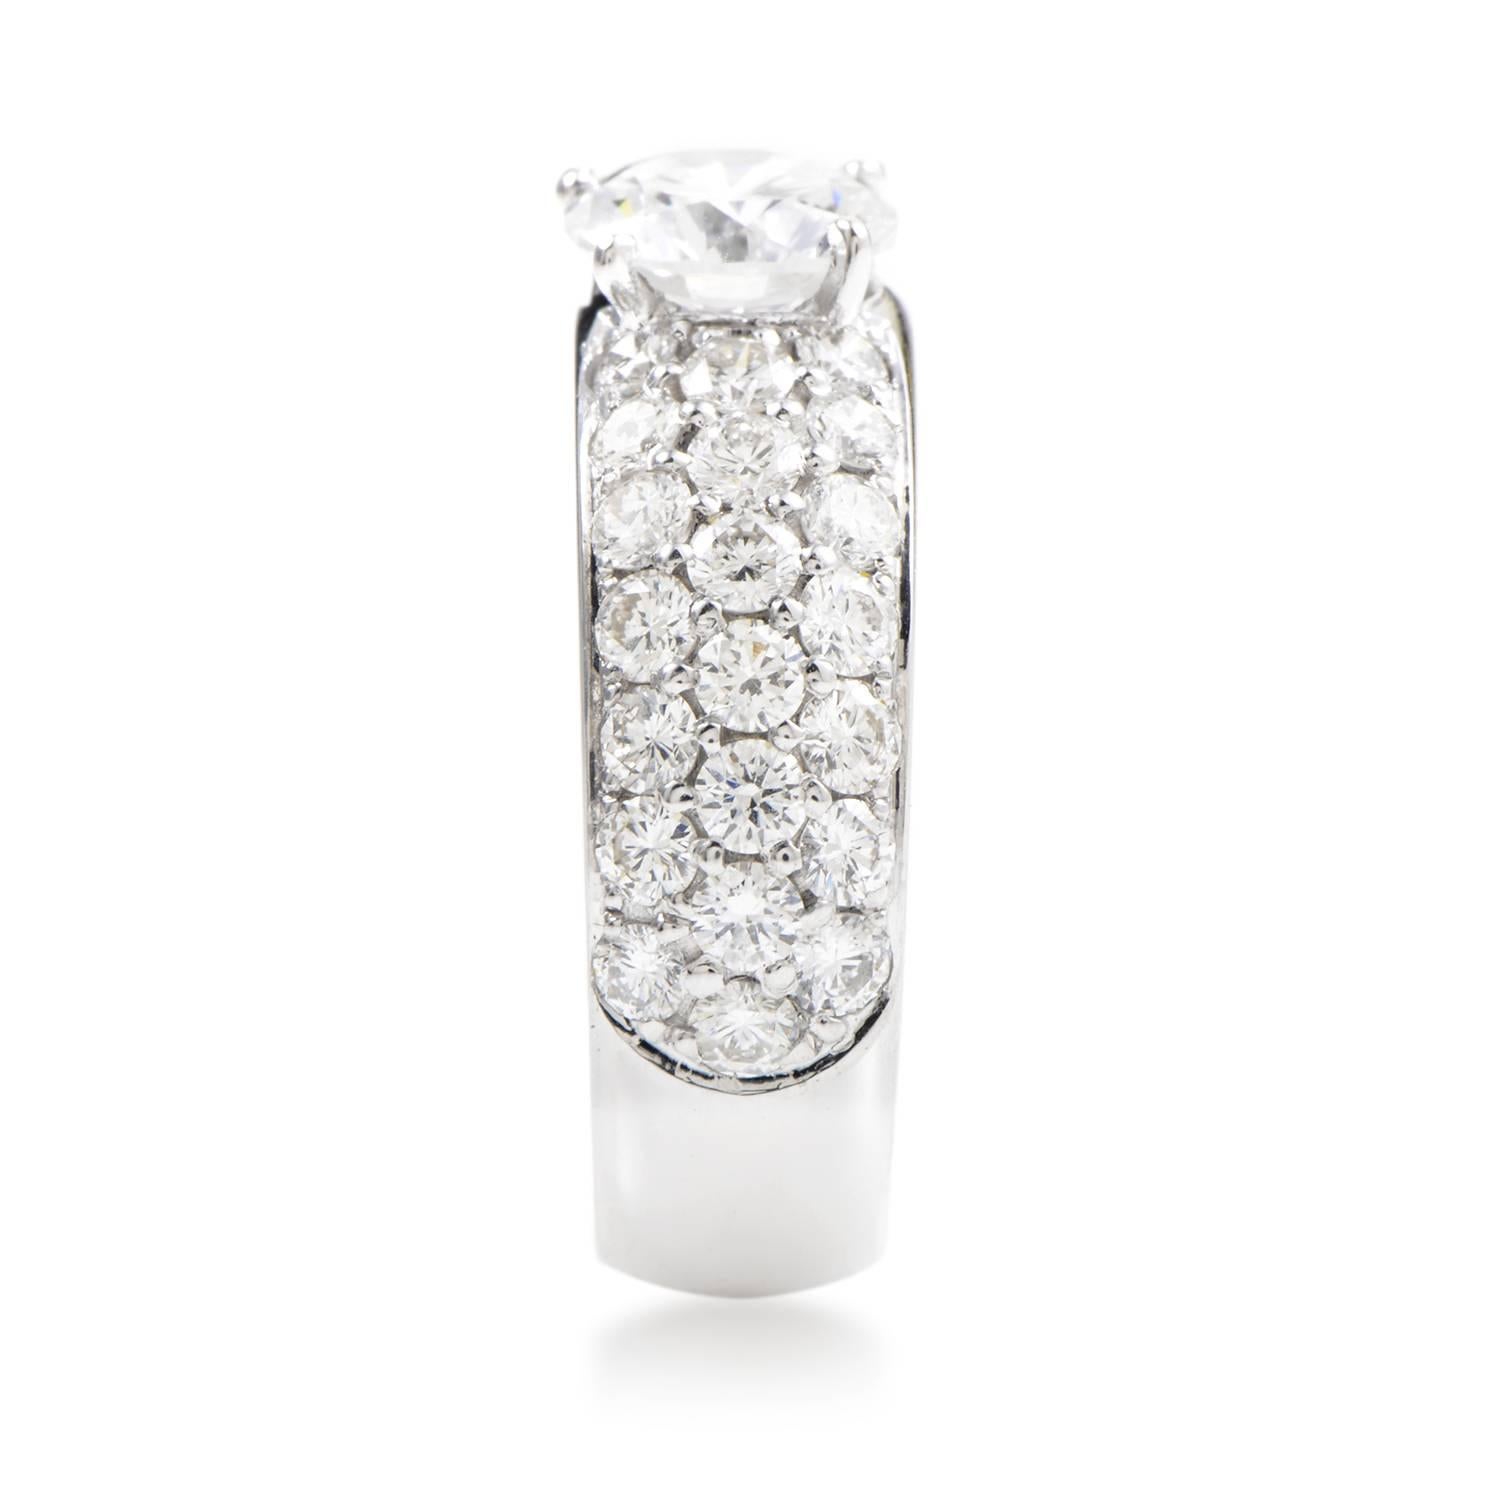 Women's Van Cleef & Arpels Diamond Gold Engagement Ring